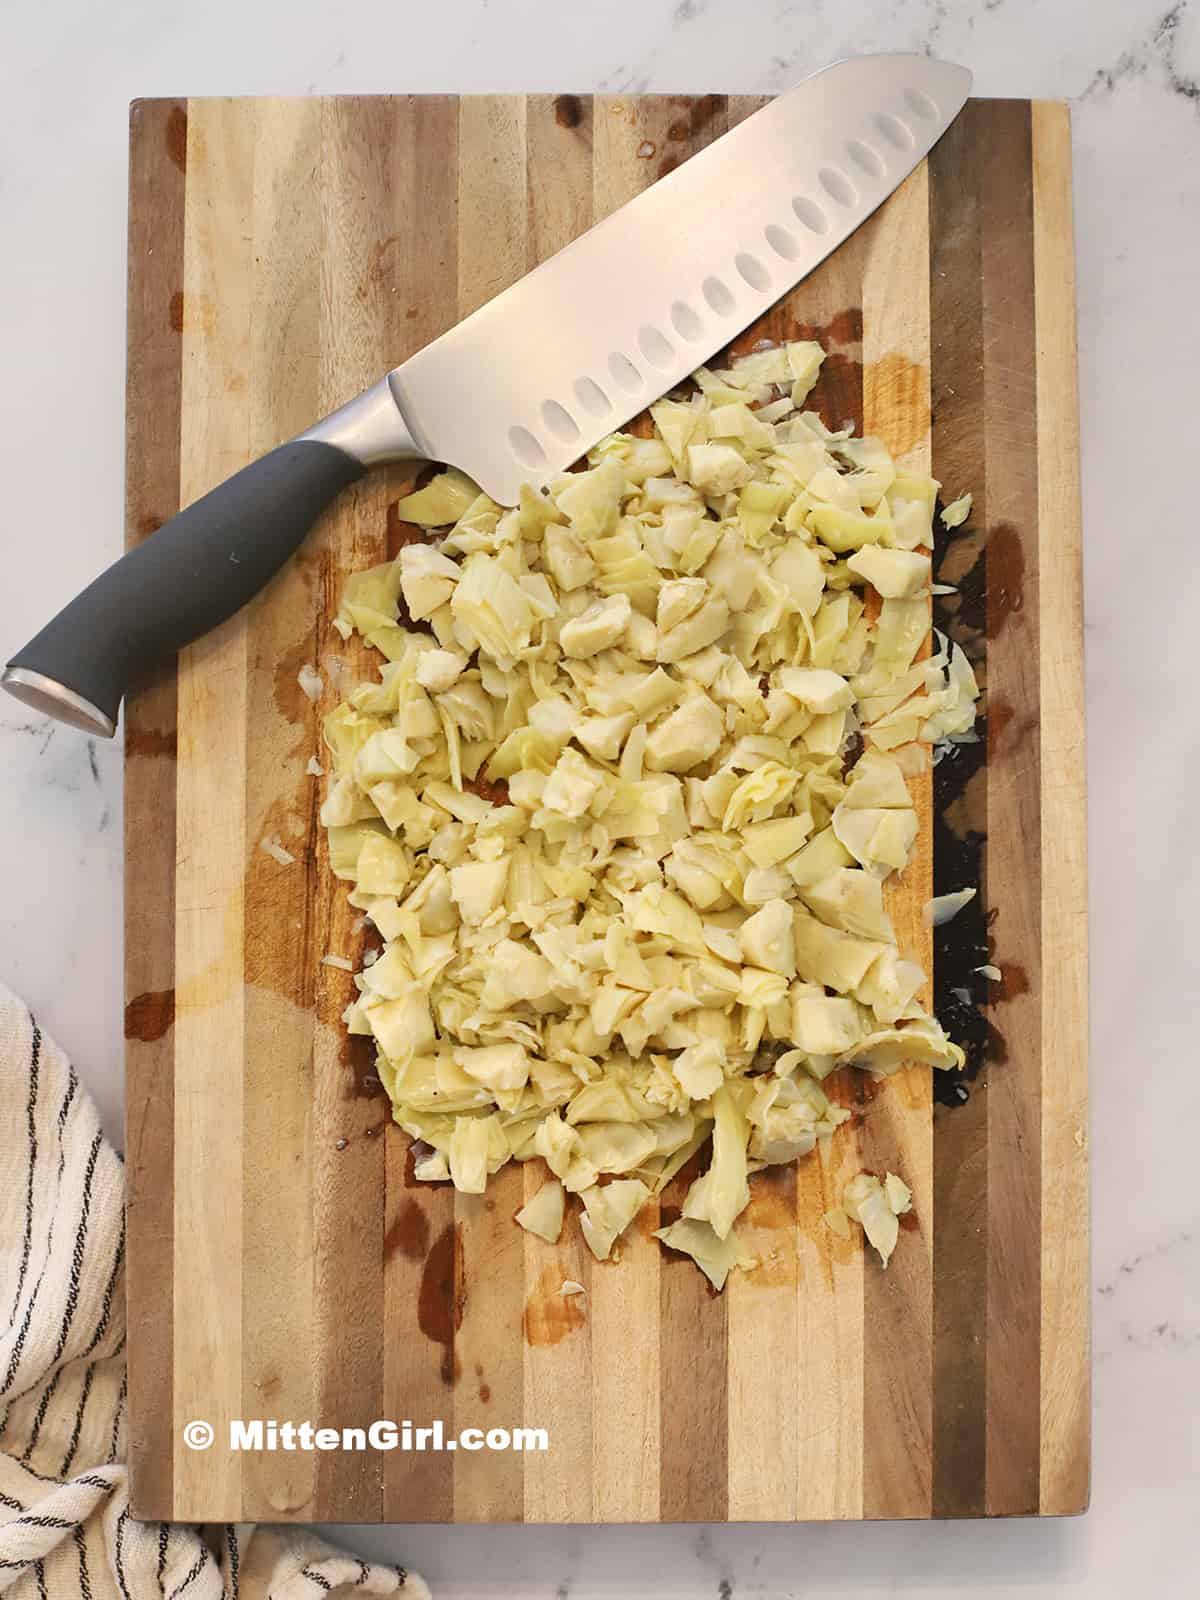 Cutting board full of chopped artichoke hearts. 